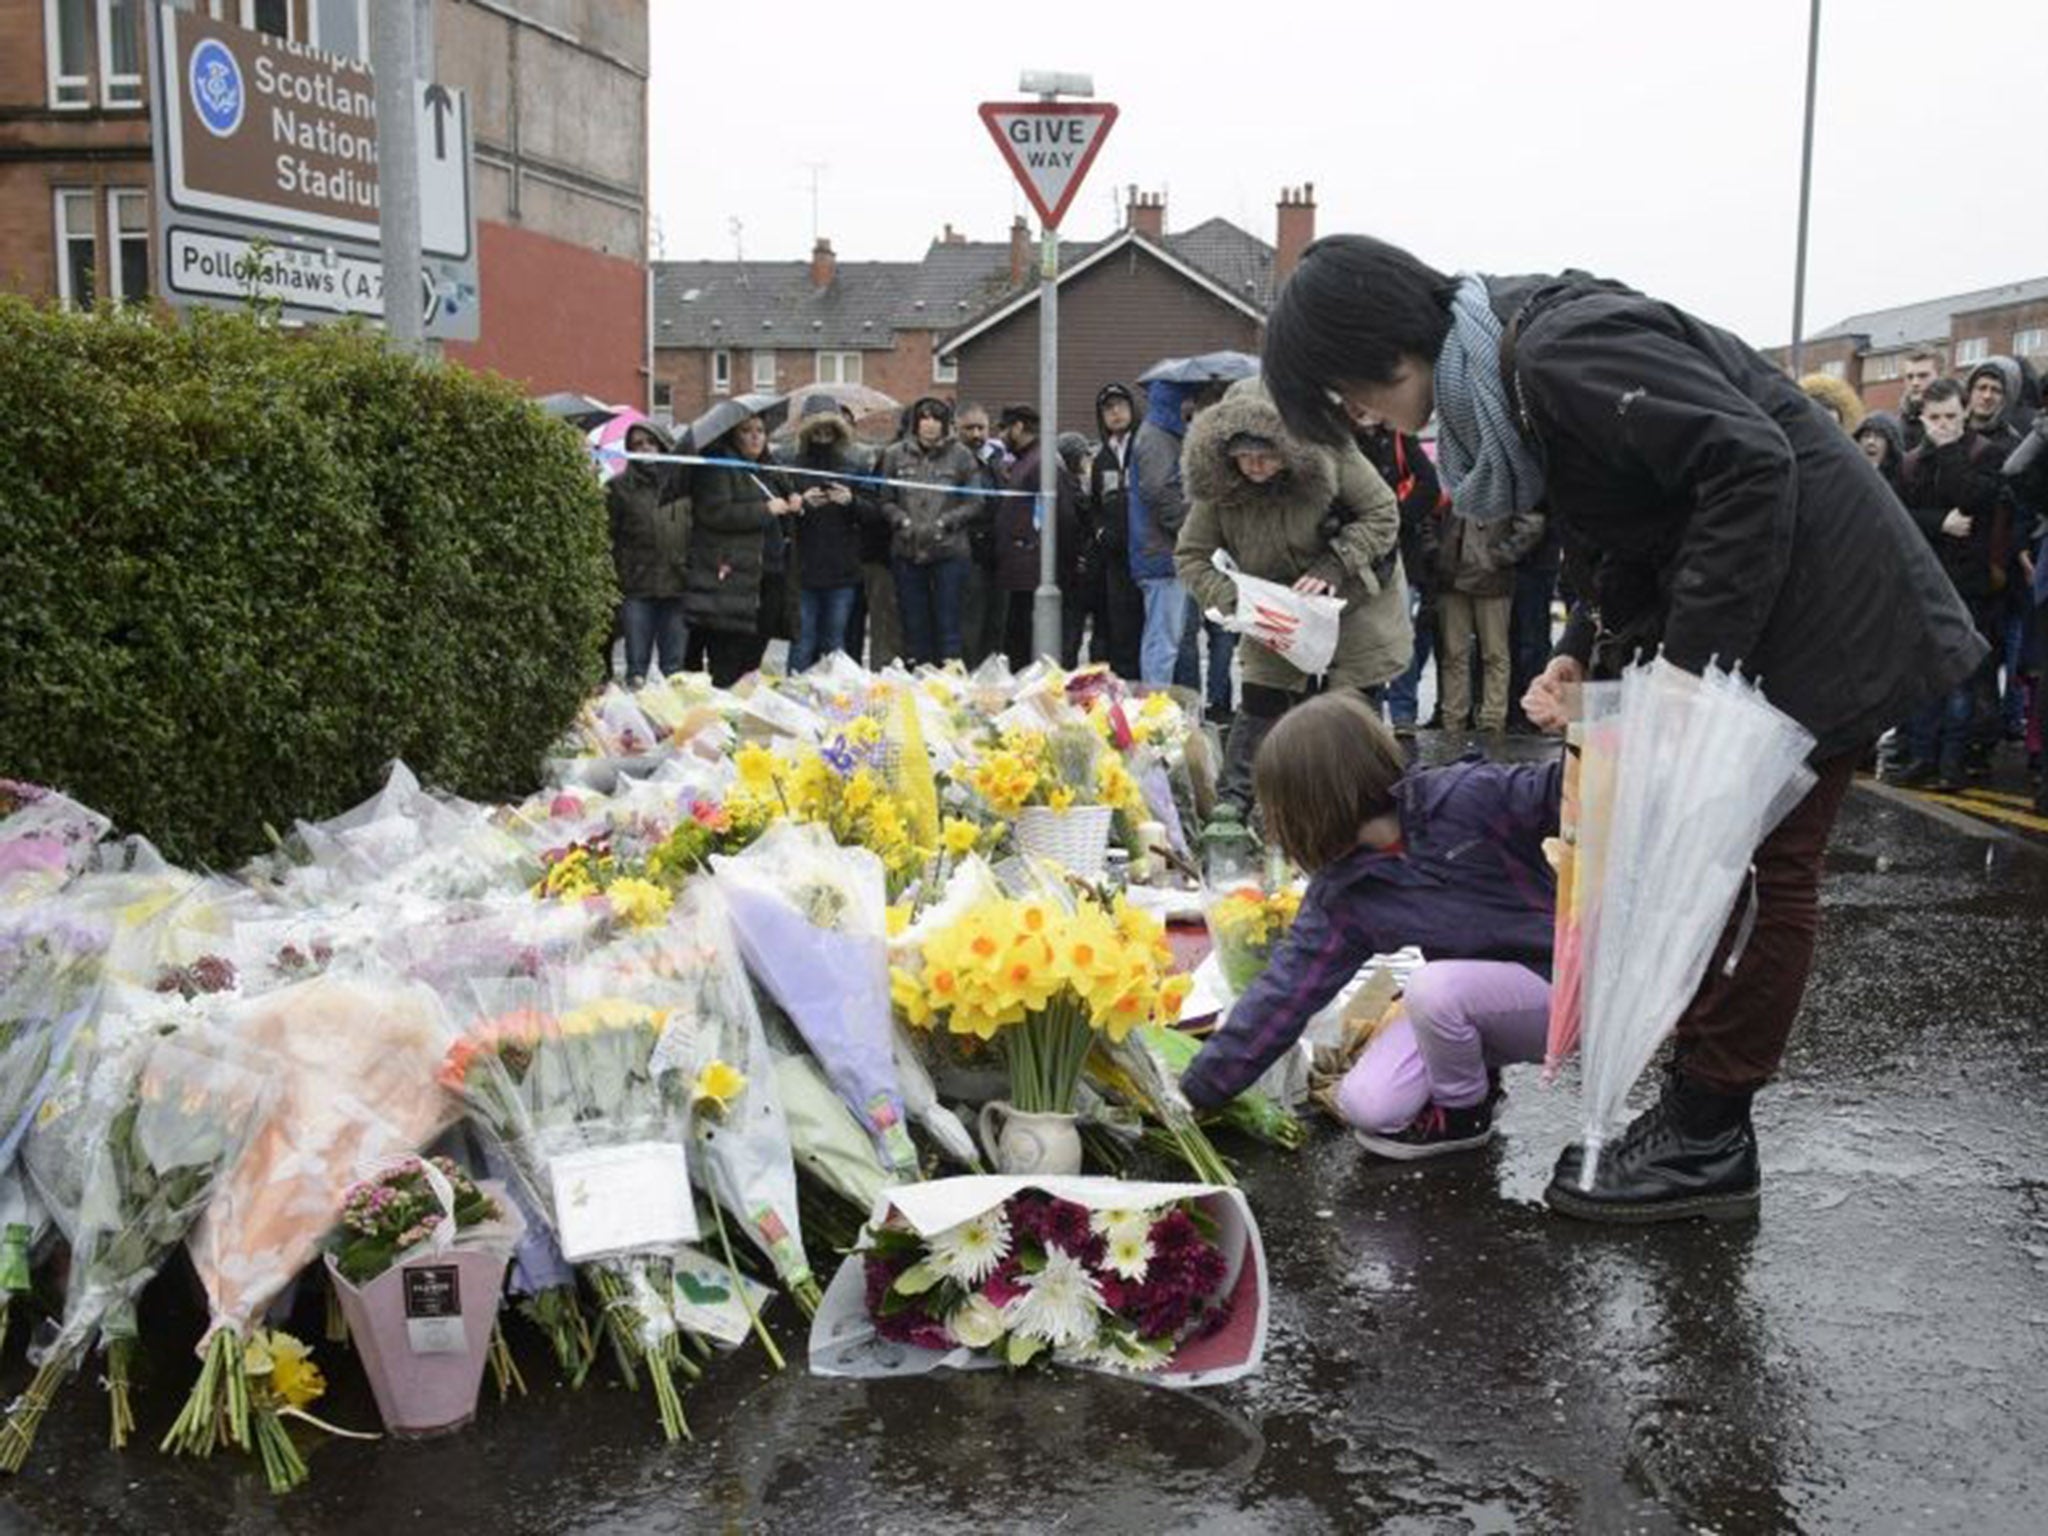 A vigil held in the memory of Glasgow shopkeeper Asad Shah.